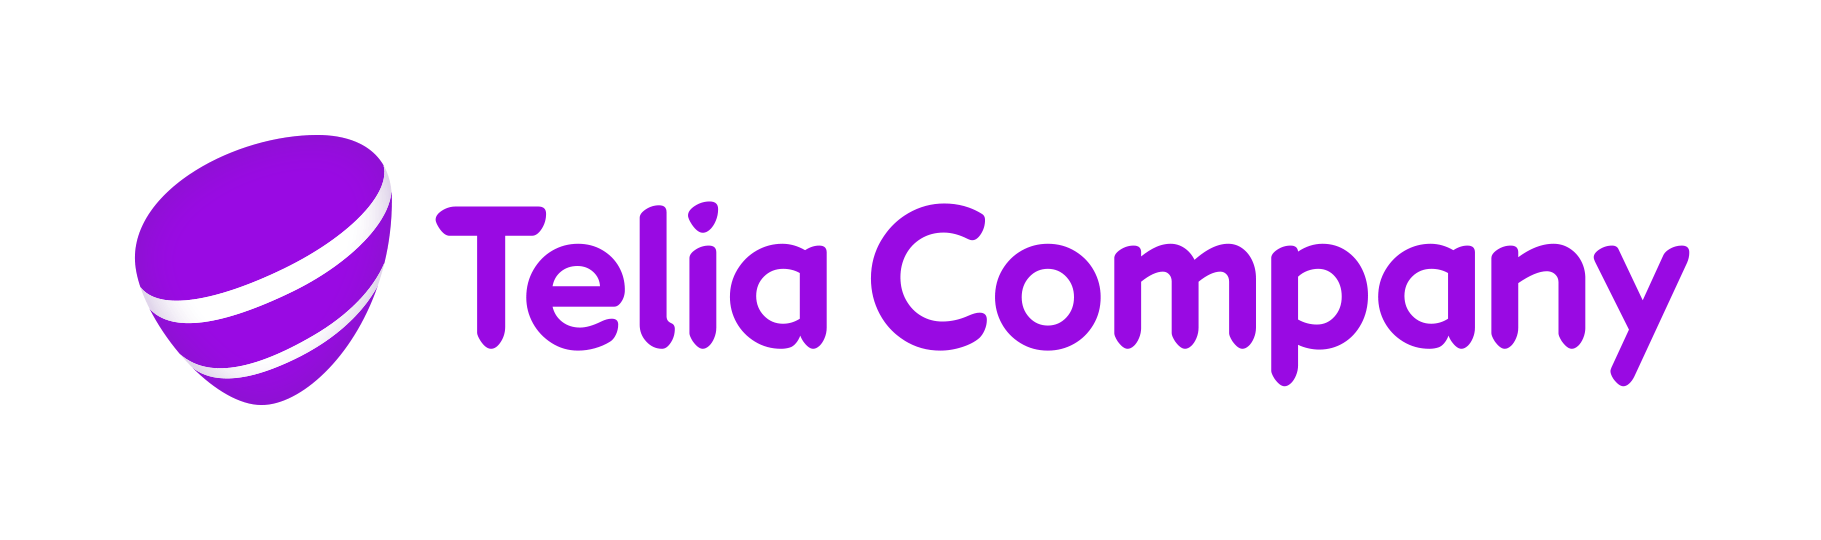 Purple Corporate Logo - Our logotype